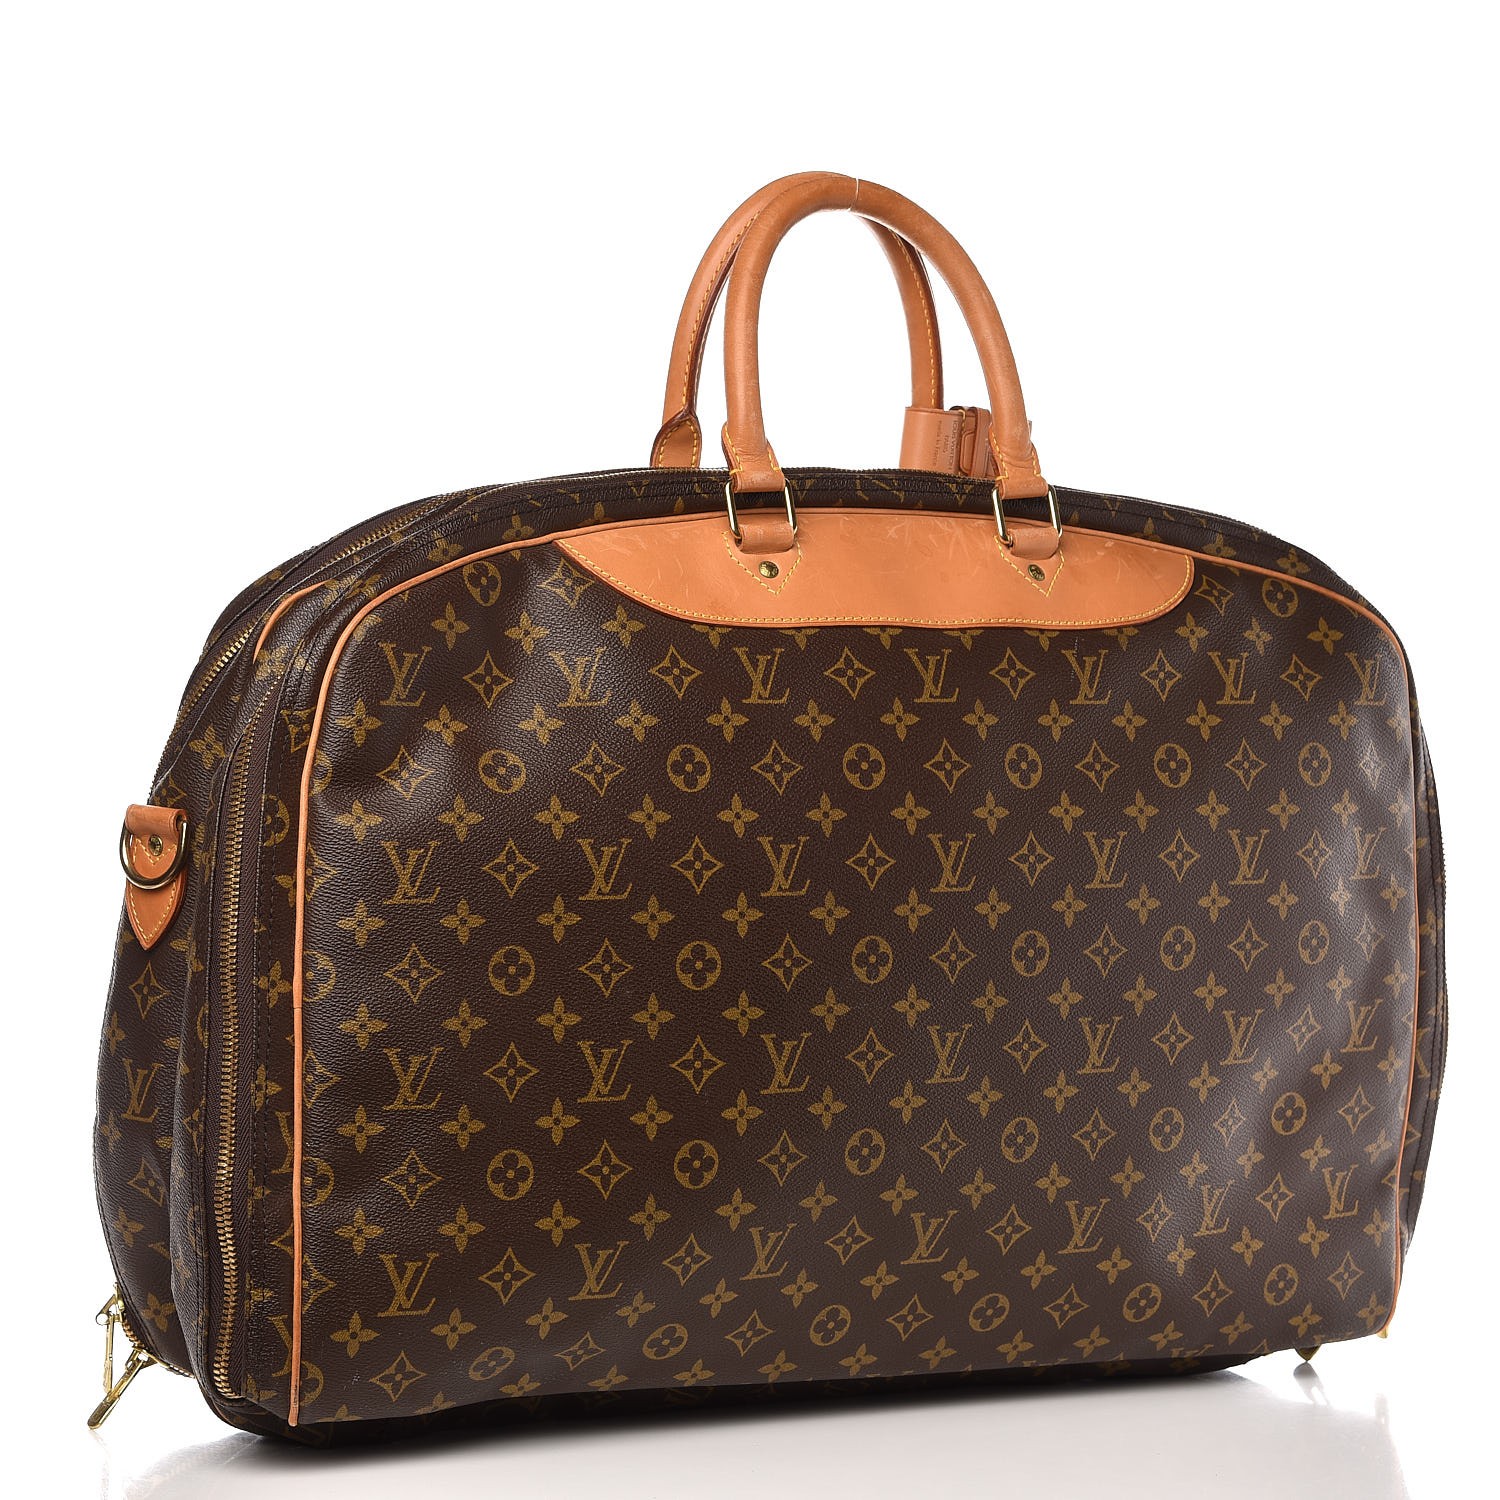 Best Louis Vuitton Handbag For Travel